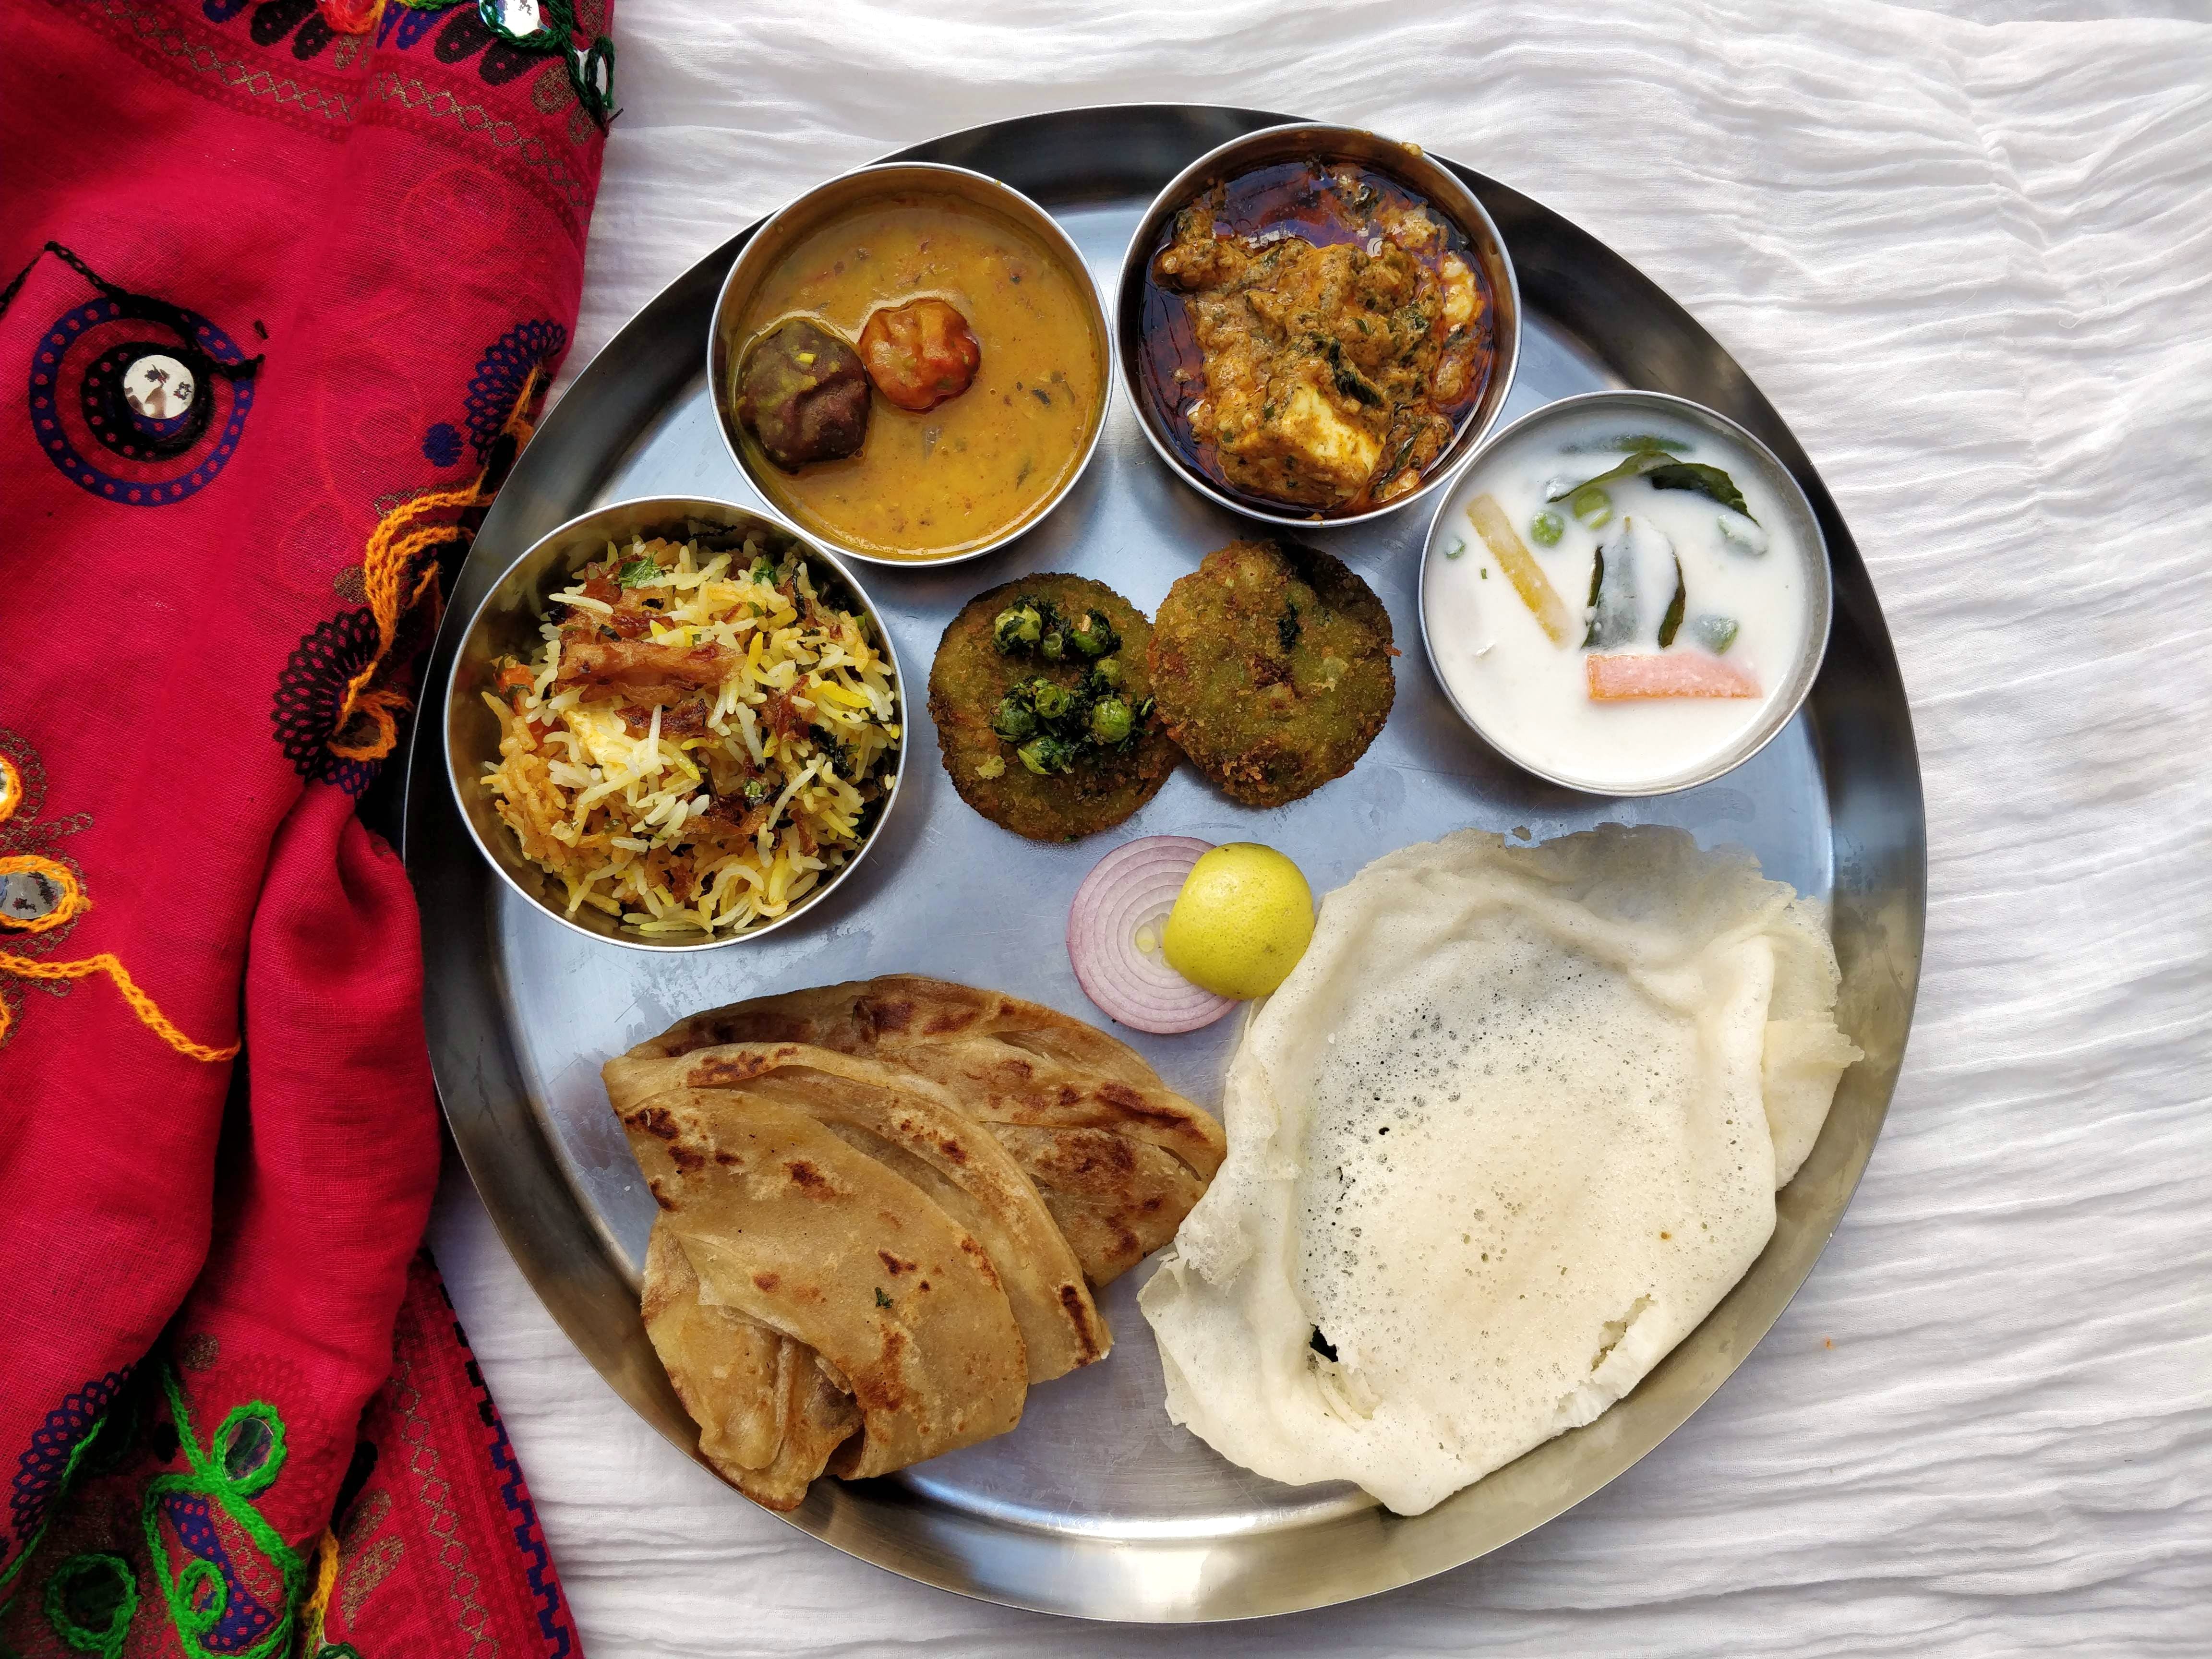 Dish,Food,Cuisine,Meal,Raita,Naan,Ingredient,Punjabi cuisine,Indian cuisine,Produce